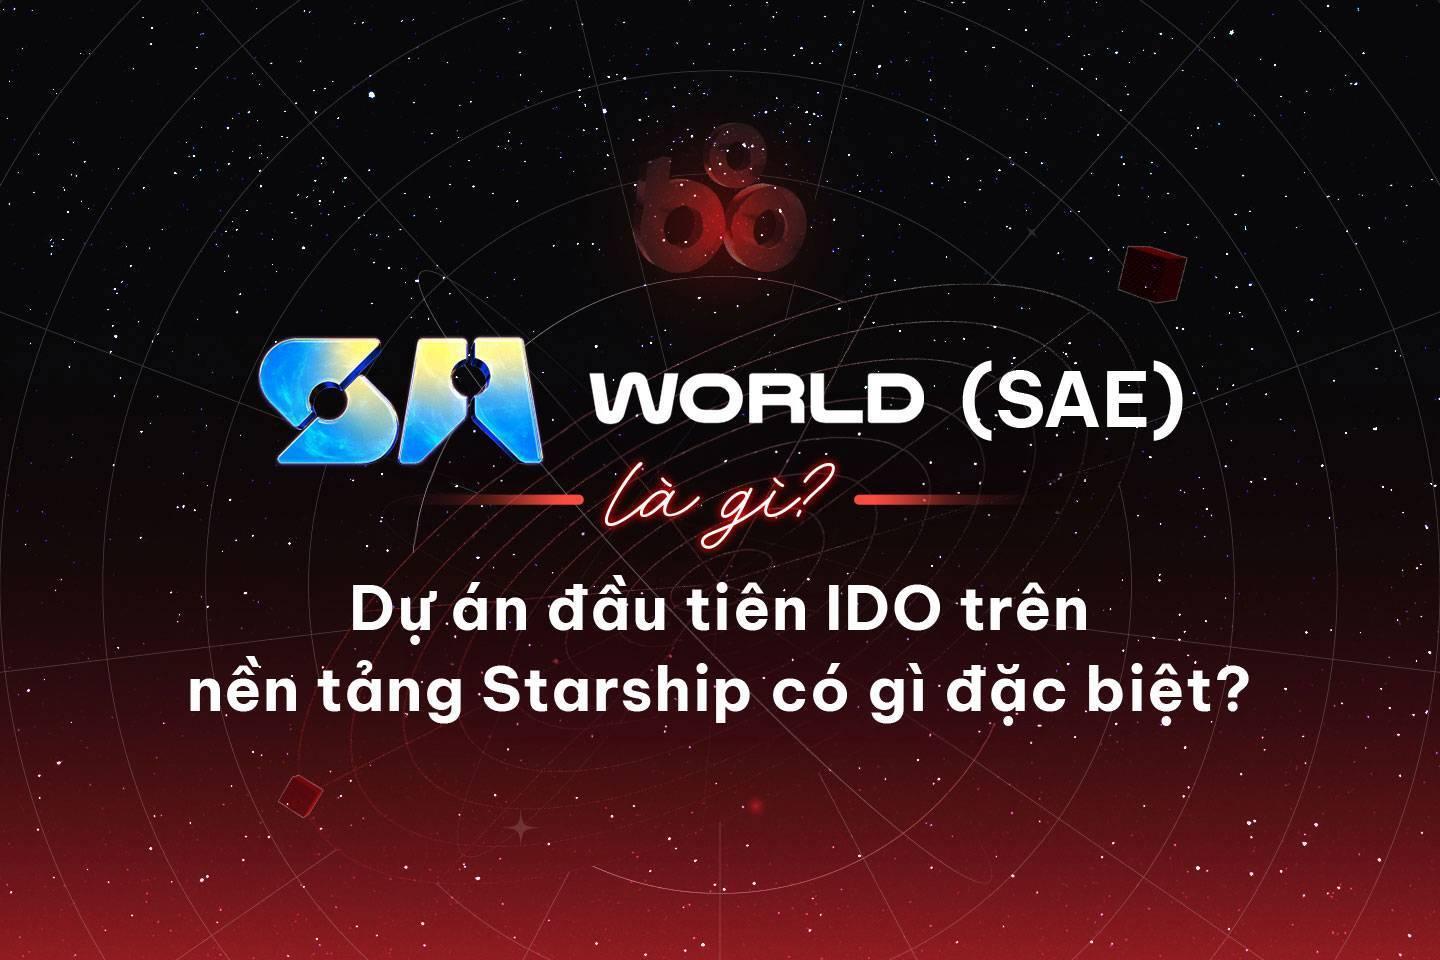 sa-world-sae-la-gi-du-an-ido-dau-tien-tren-nen-tang-starship-co-gi-dac-biet